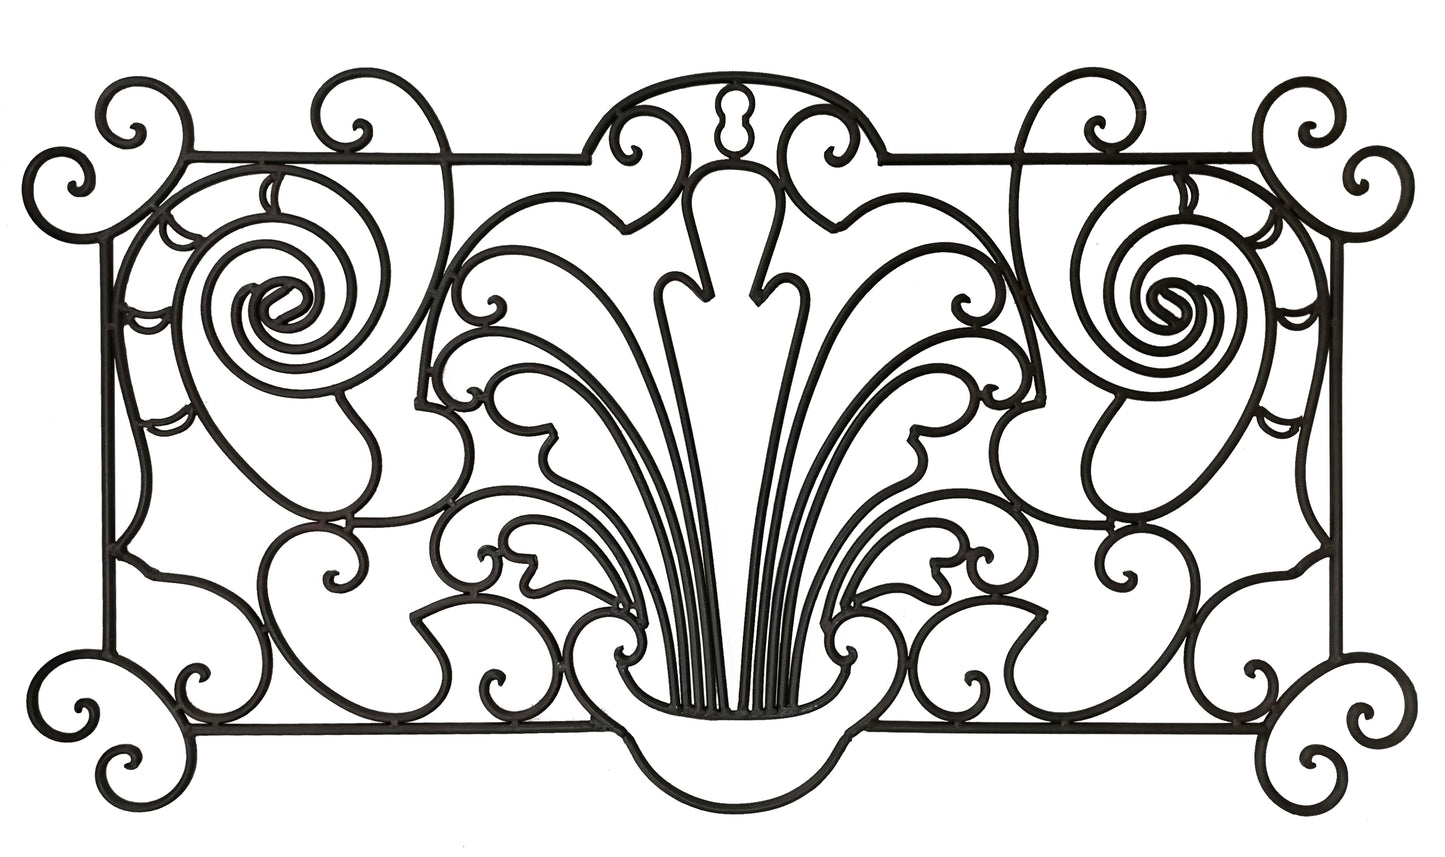 Decorative Ornamental Panel Fence 59.5" x 32" Wrought Iron Metal Outdoor (70041) - SHEMONICO